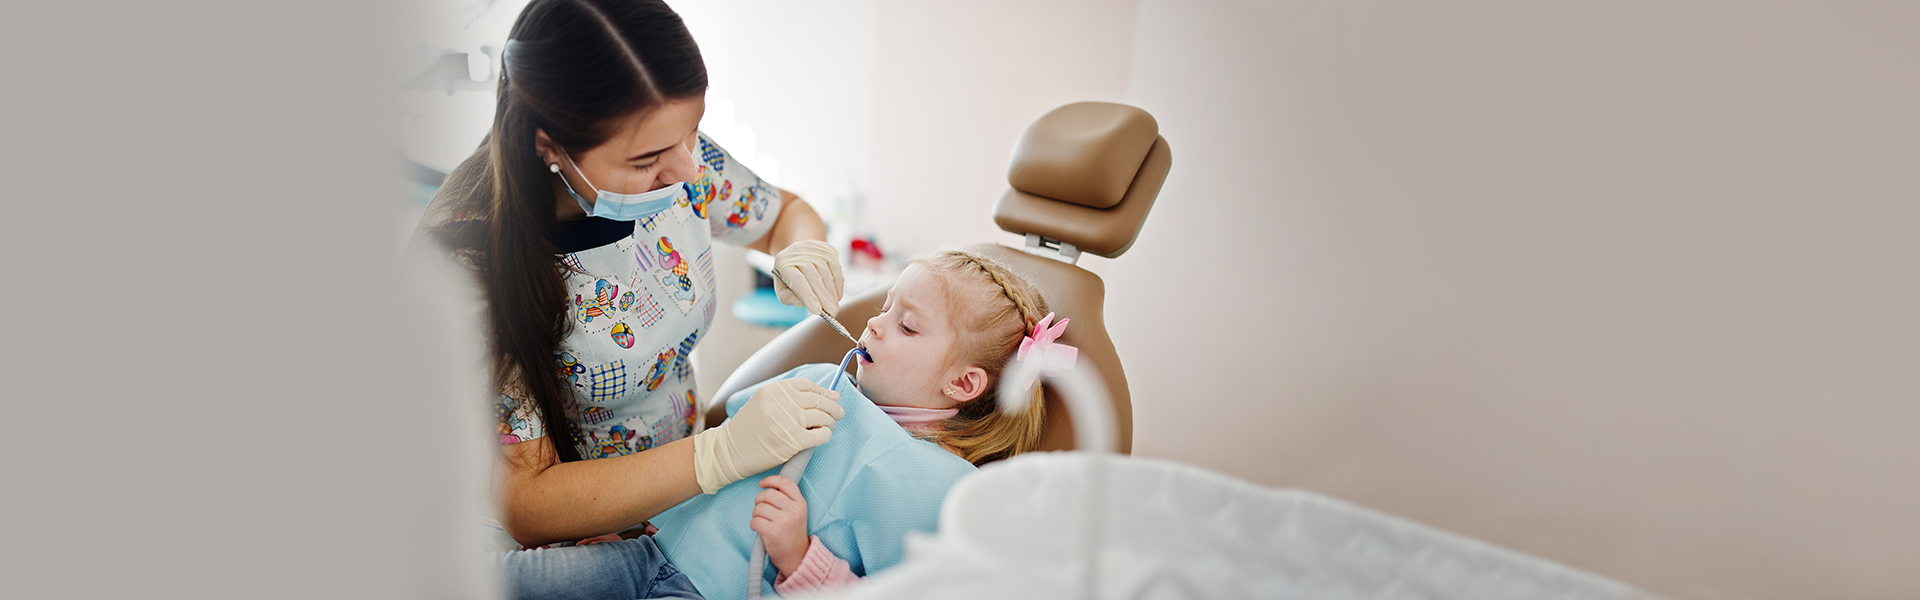 Why Children Should Have Dental Sealants On Their Teeth?